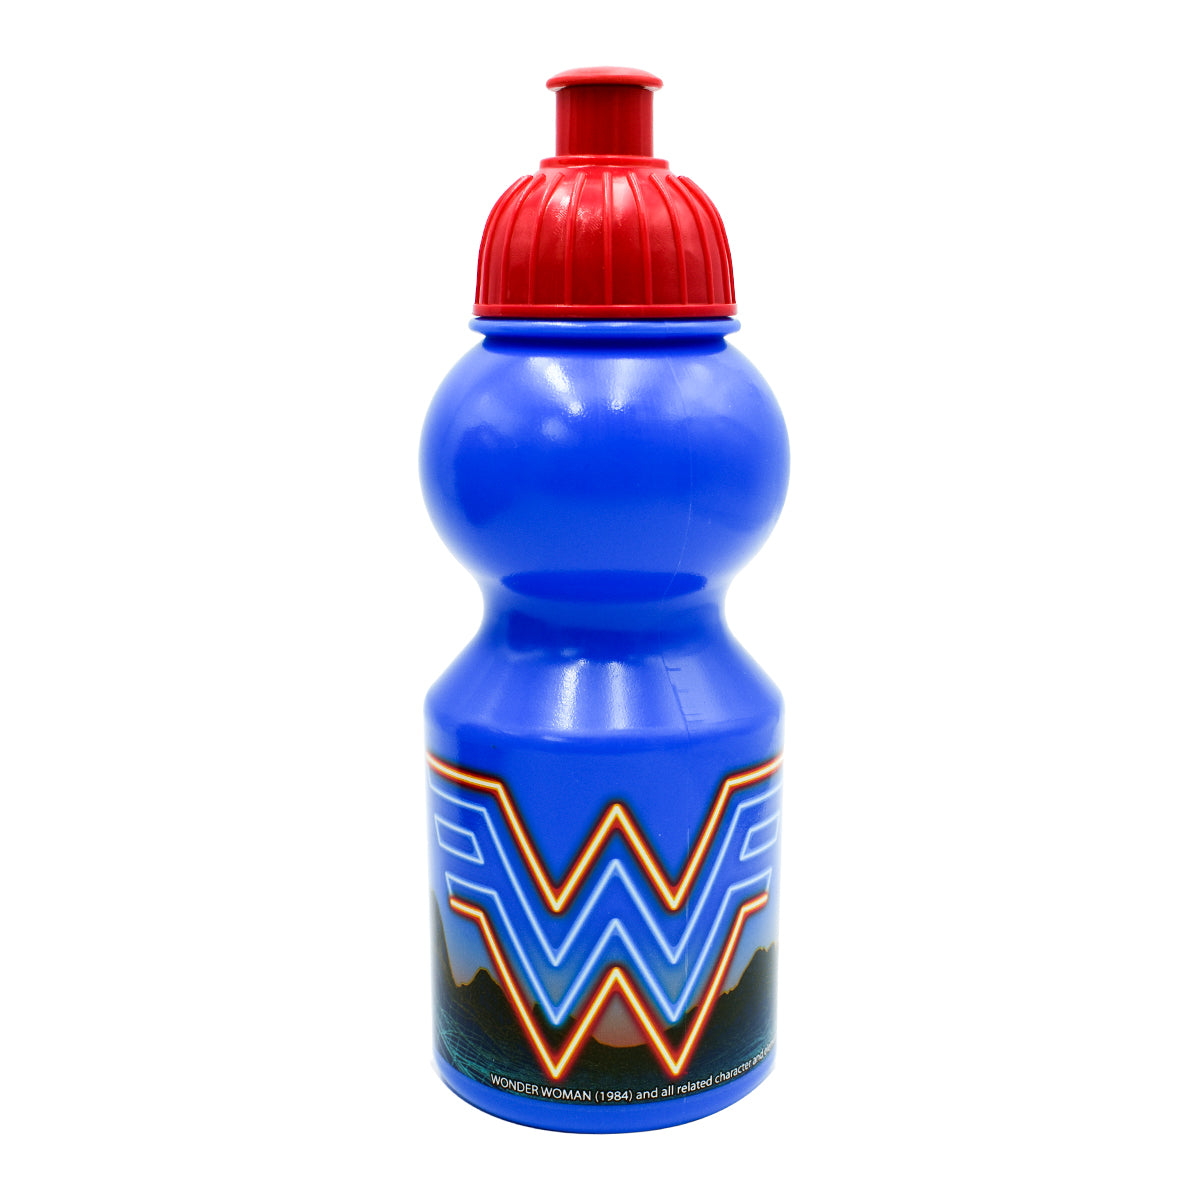 Lonchera de Mano con Botella Fun Kids Warner Bros. DC Comics Wonder Woman / Mujer Maravilla 84